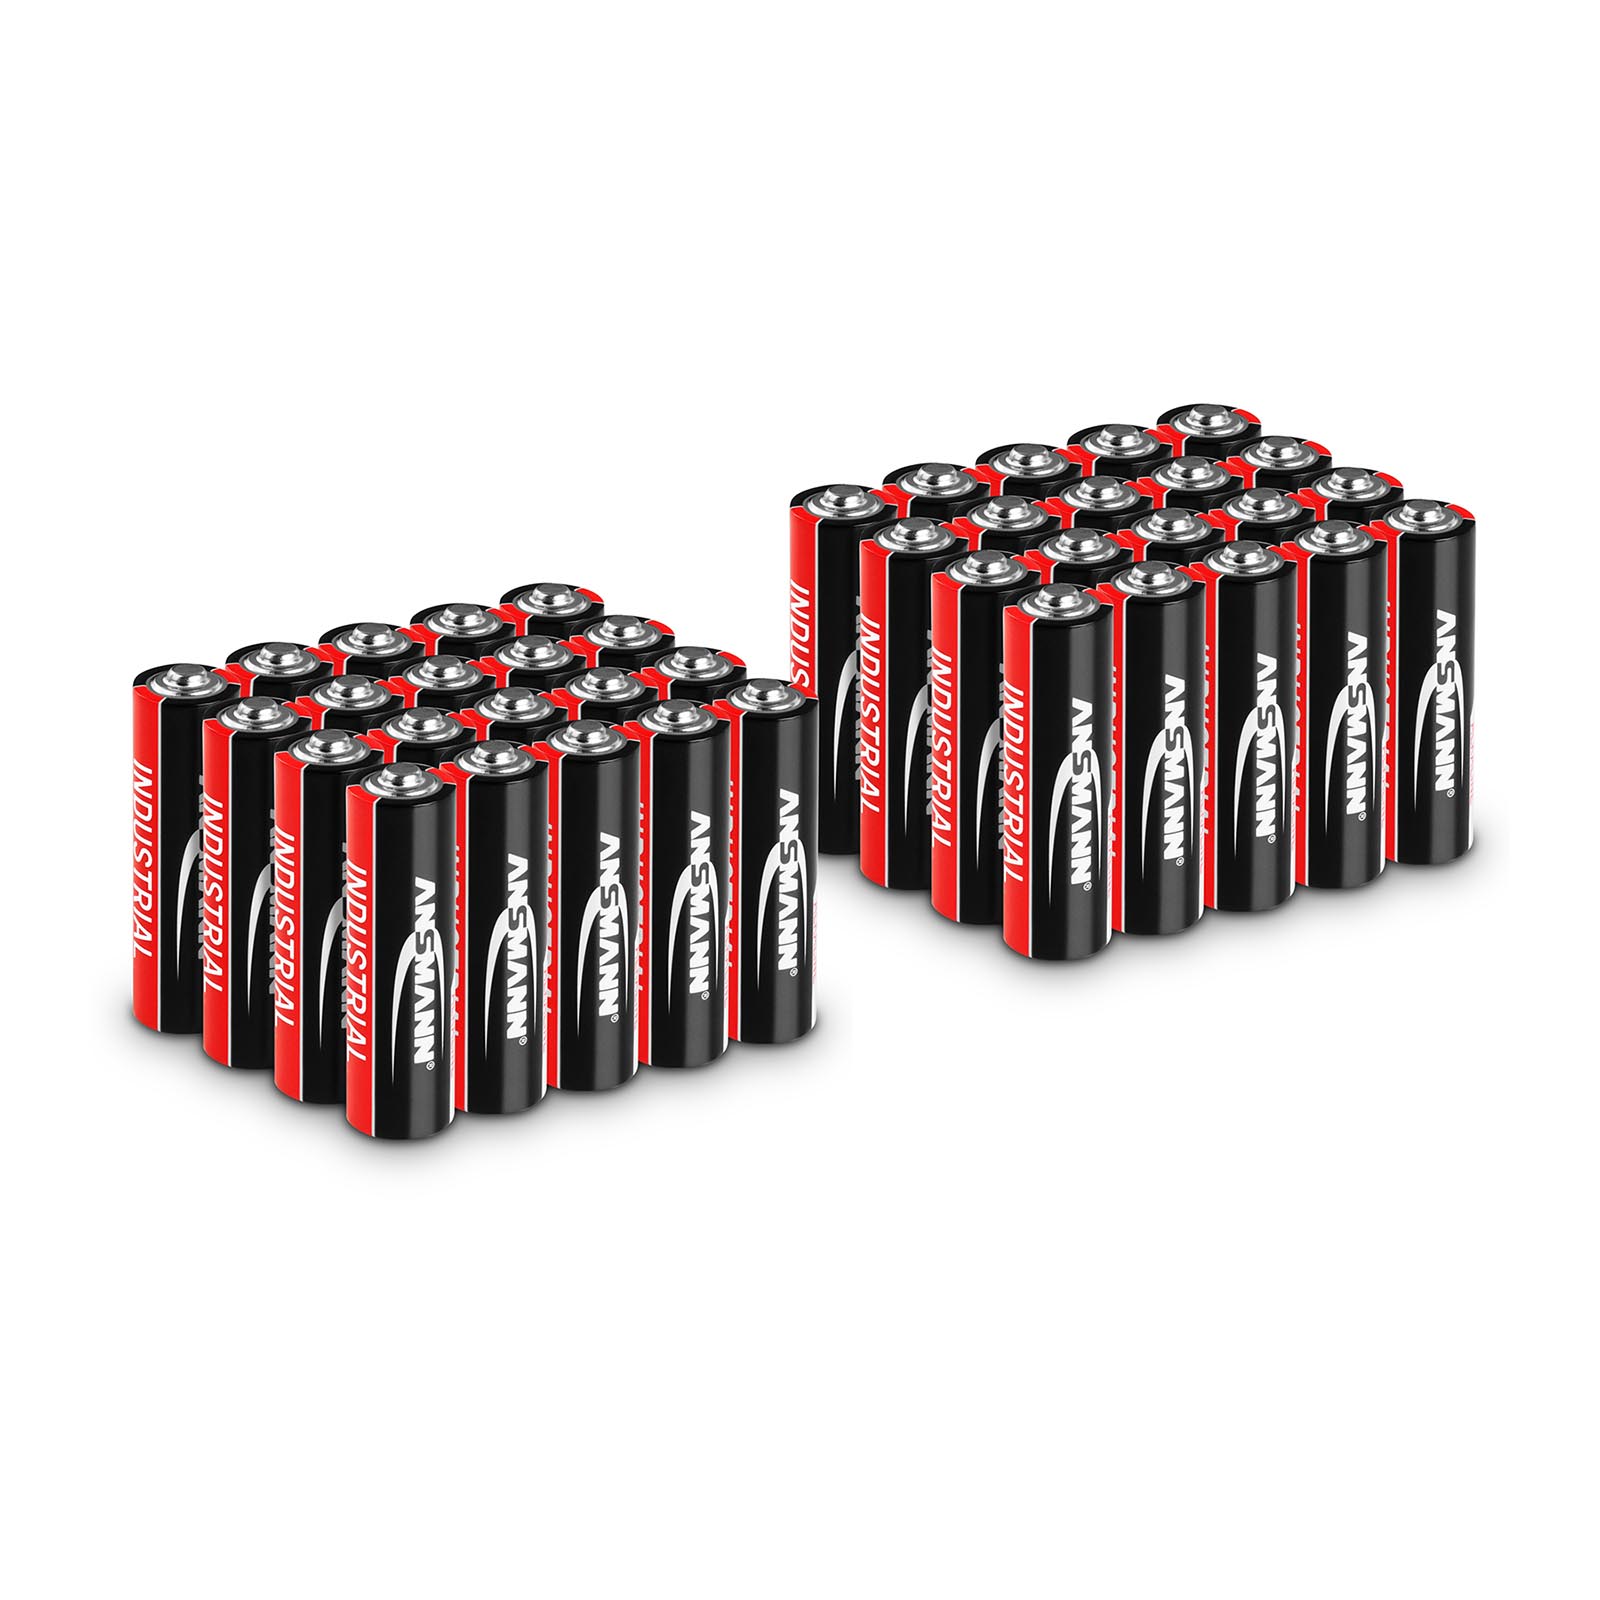 40 x Mignon AA LR6 Batteries - Ansmann INDUSTRIAL Alkaline Batteries - 1.5 V